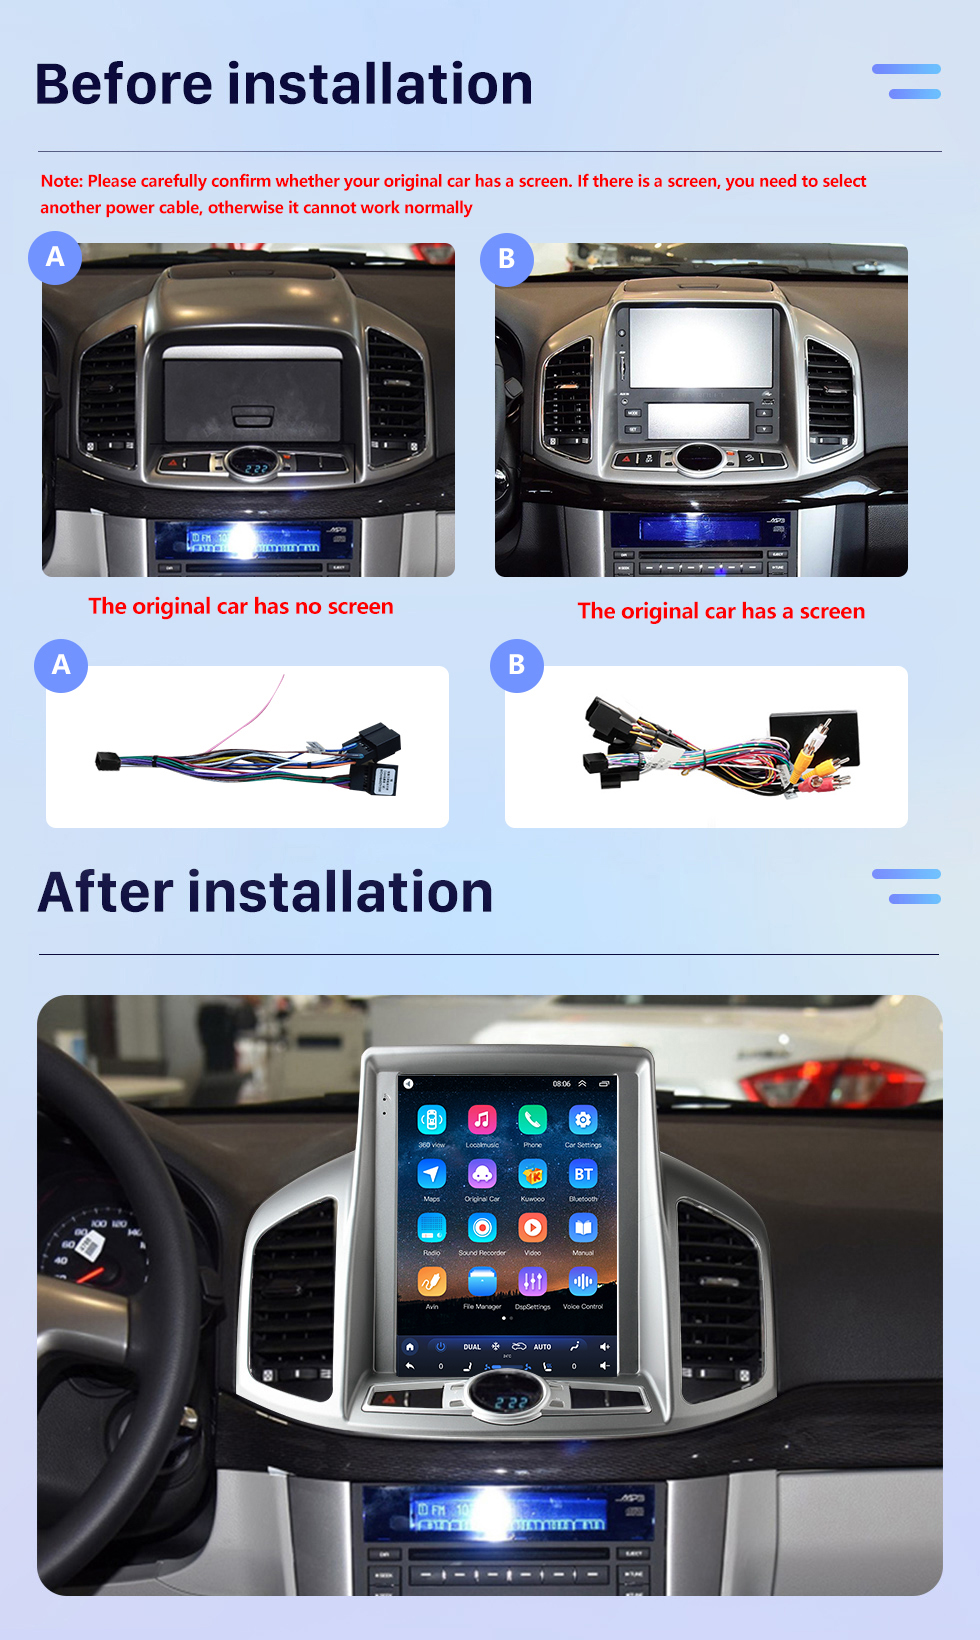 Seicane Android 10.0 9,7 дюйма для 2012-2017 Chevy Chevrolet Captiva Radio с сенсорным экраном HD Система GPS-навигации Поддержка Bluetooth Carplay TPMS